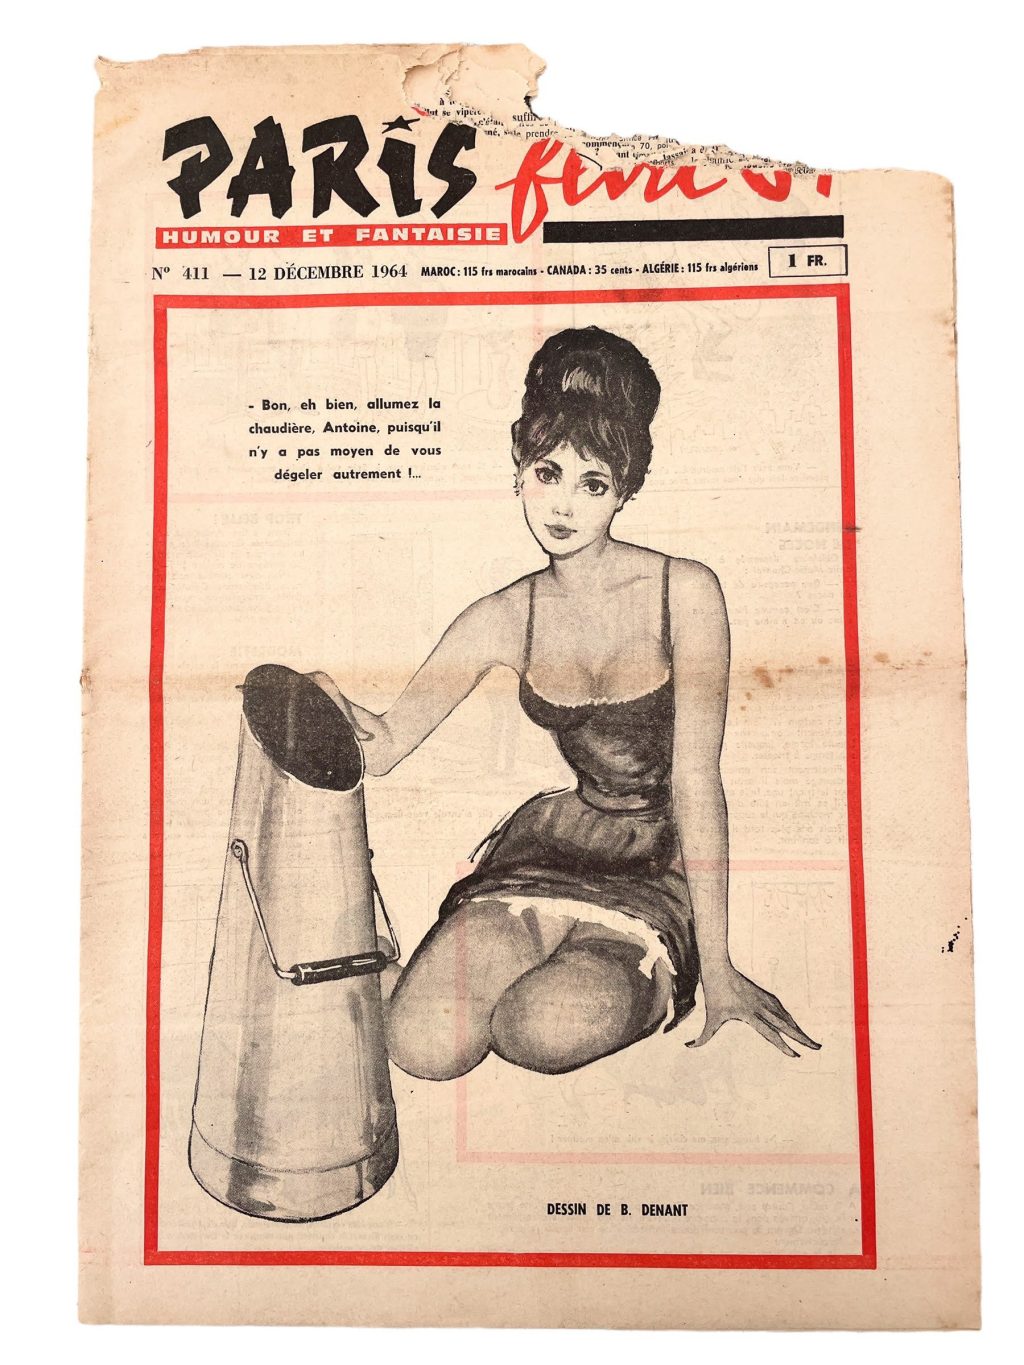 Vintage French Paris Flirt Number 411 12/12/1964 Adult Comic Newspaper Humour Fantasy Cartoons Romance Memorabilia Collector c1964-65 / EVE